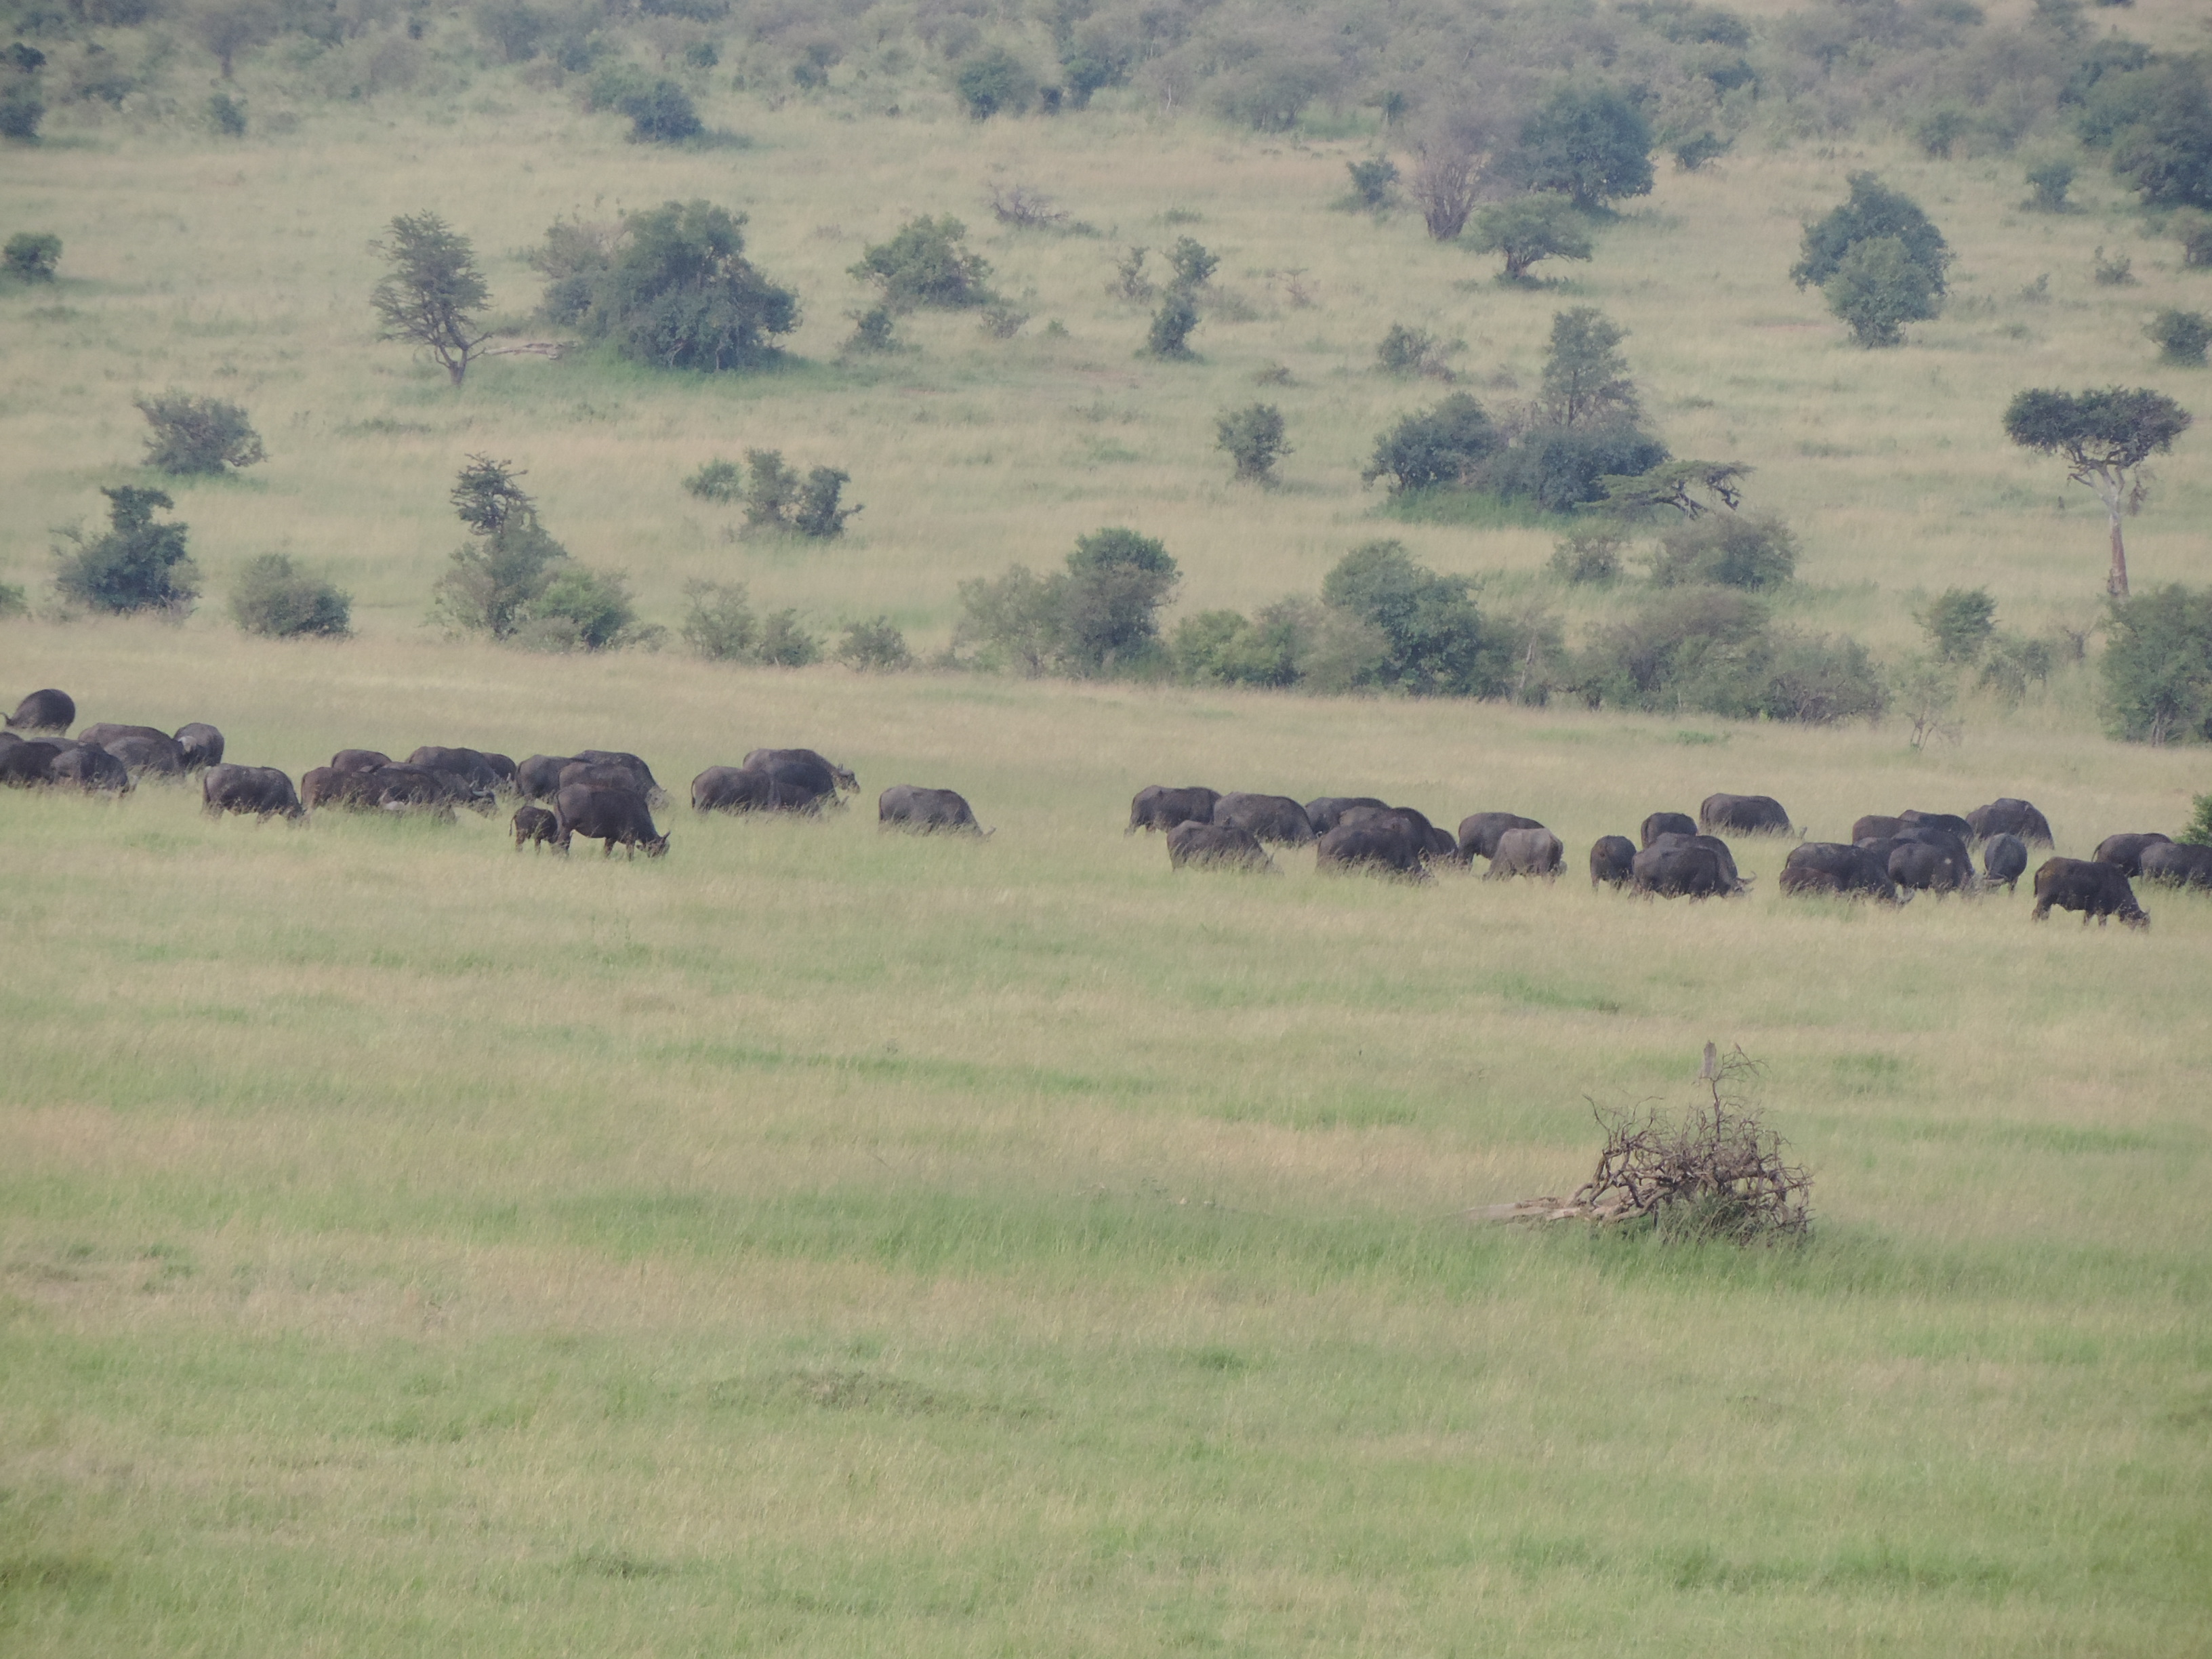 Kenya Adventure Safaris, YHA Kenya Travel,Masai Mara Tours.